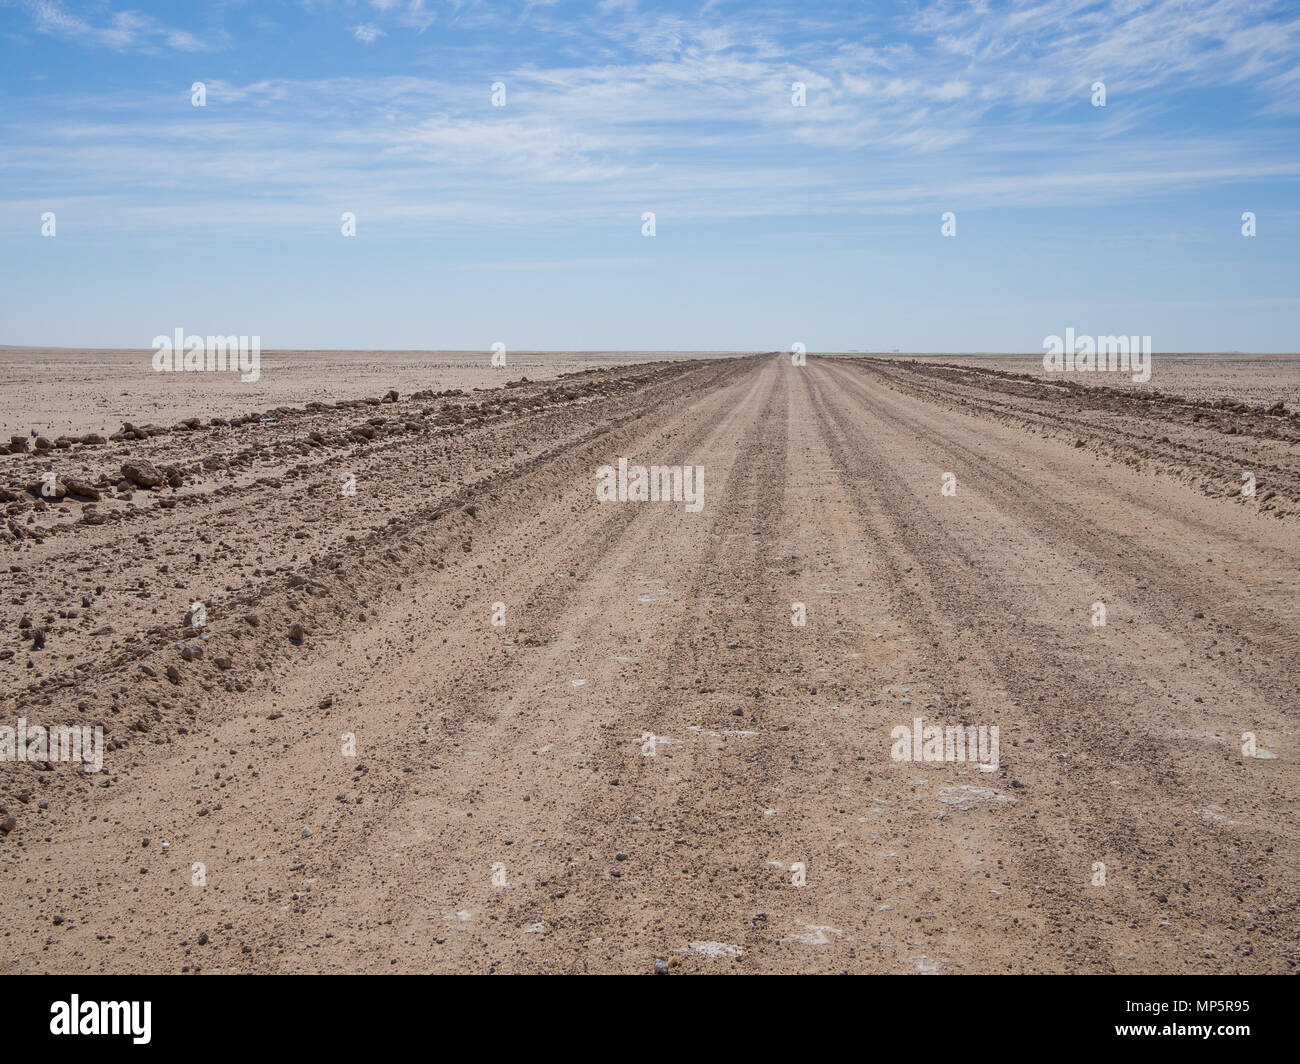 Endless empty dirt road in Namib desert of Namib-Naukluft National Park, Namibia, Africa Stock Photo